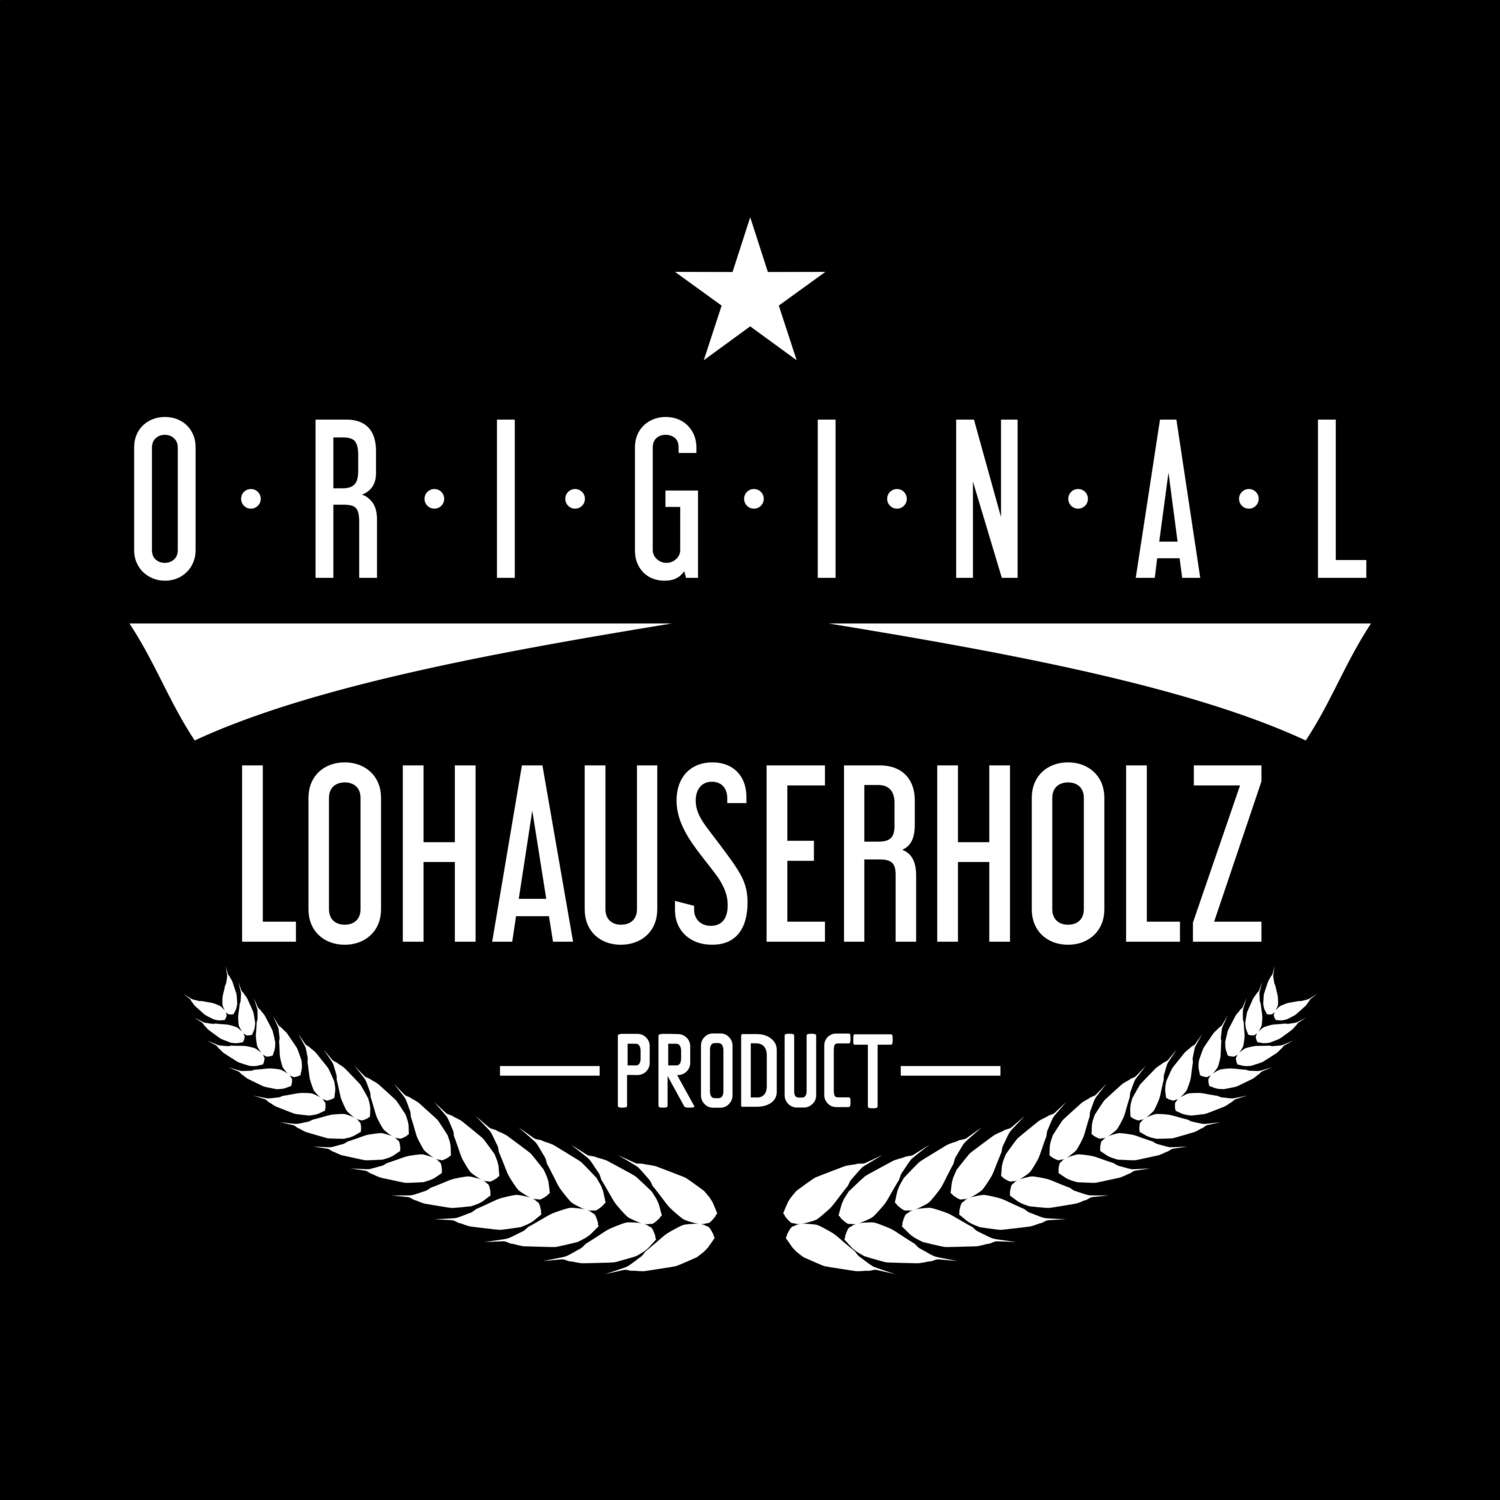 Lohauserholz T-Shirt »Original Product«